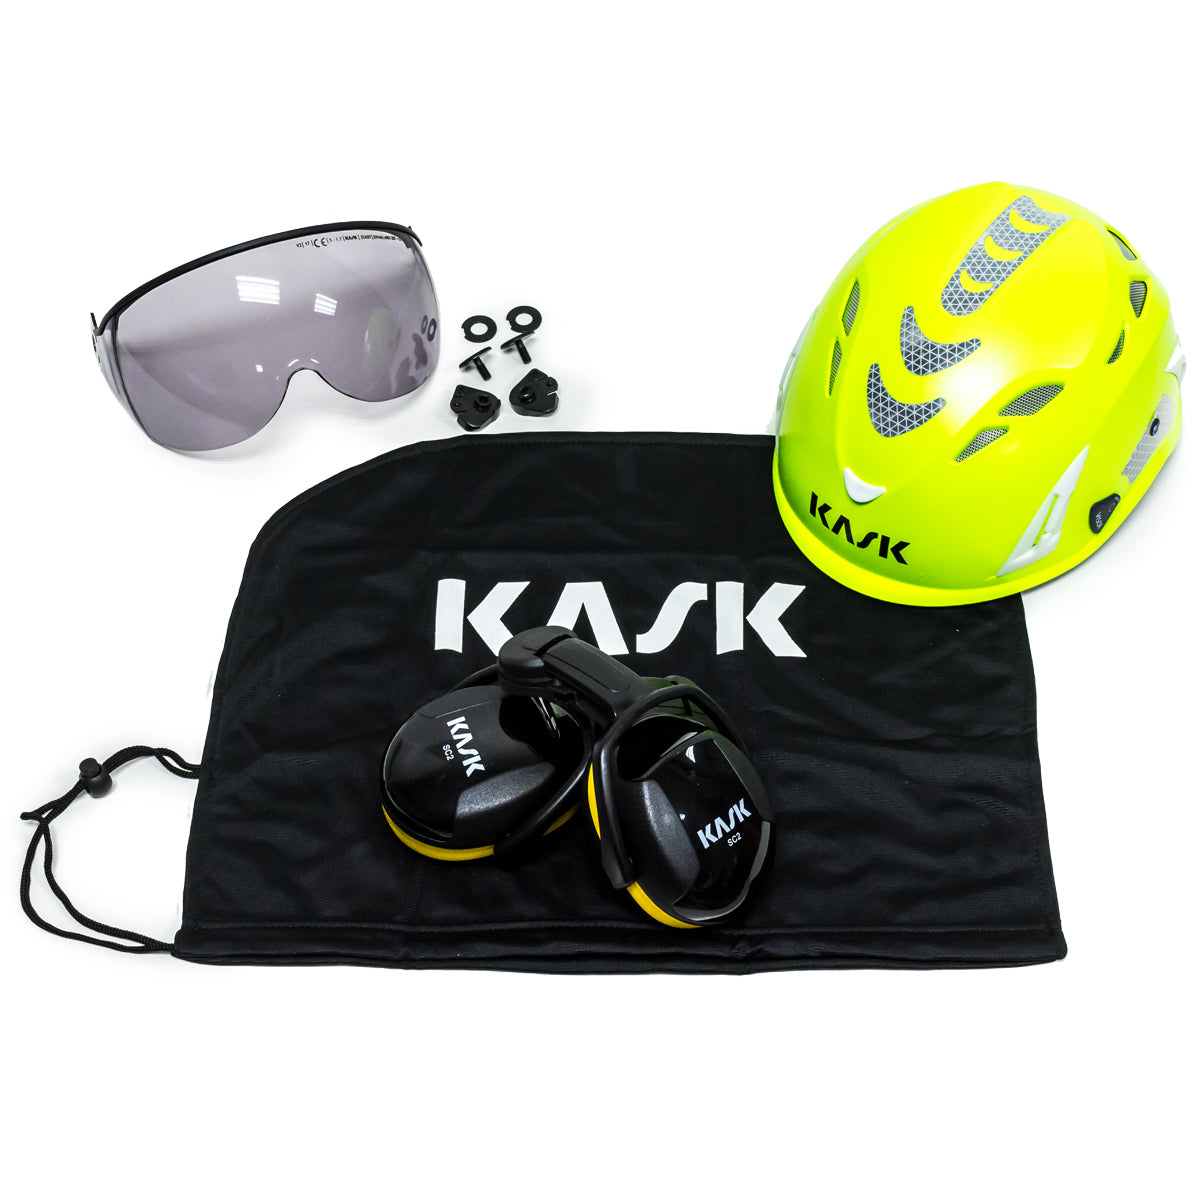 Kask Professional Arborist Hi-Viz Fluorescent Lime Super Plasma Helmet Kit